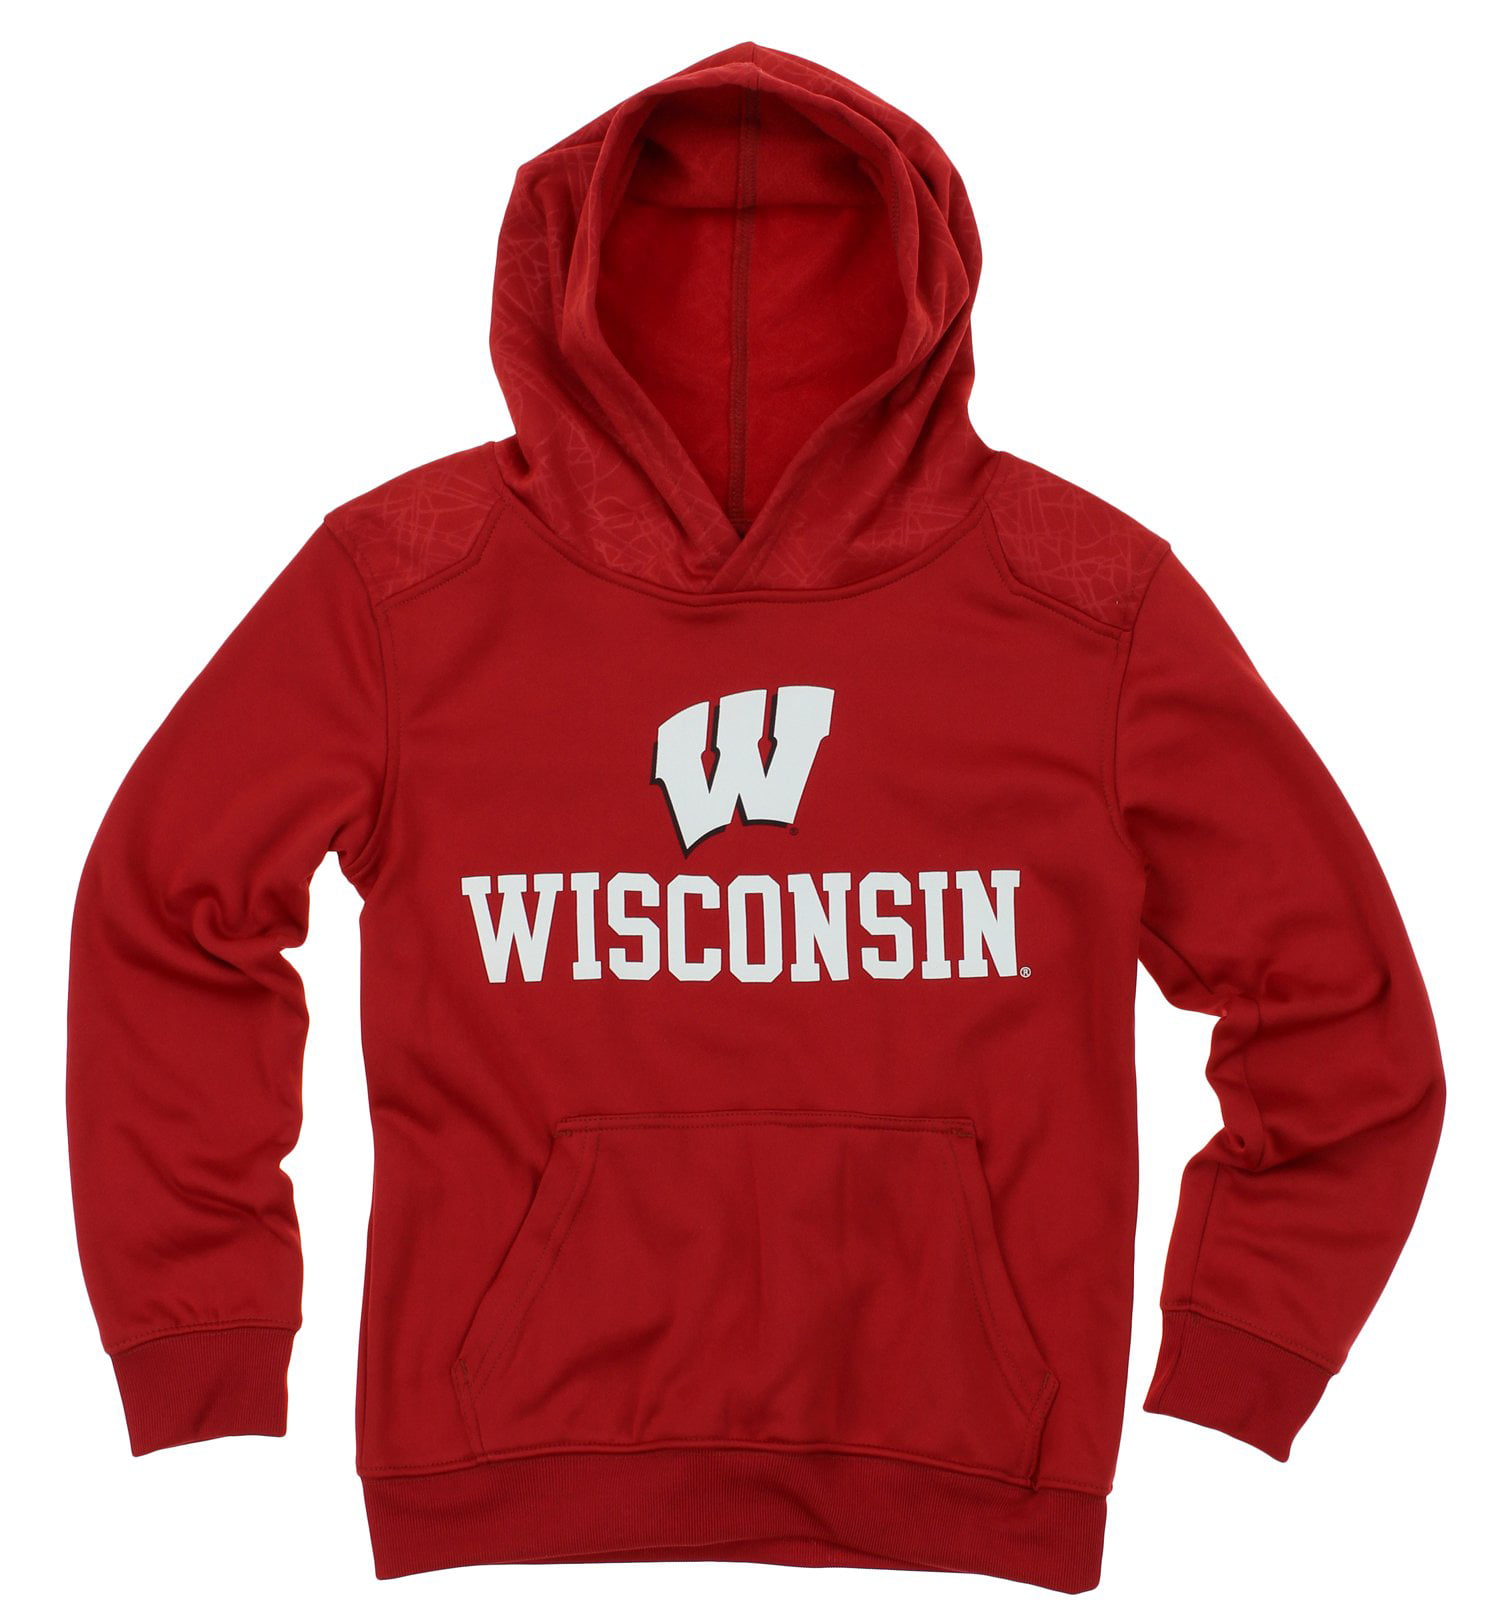 NCAA Youth Wisconsin Badgers Performance Hoodie, Red - Walmart.com ...